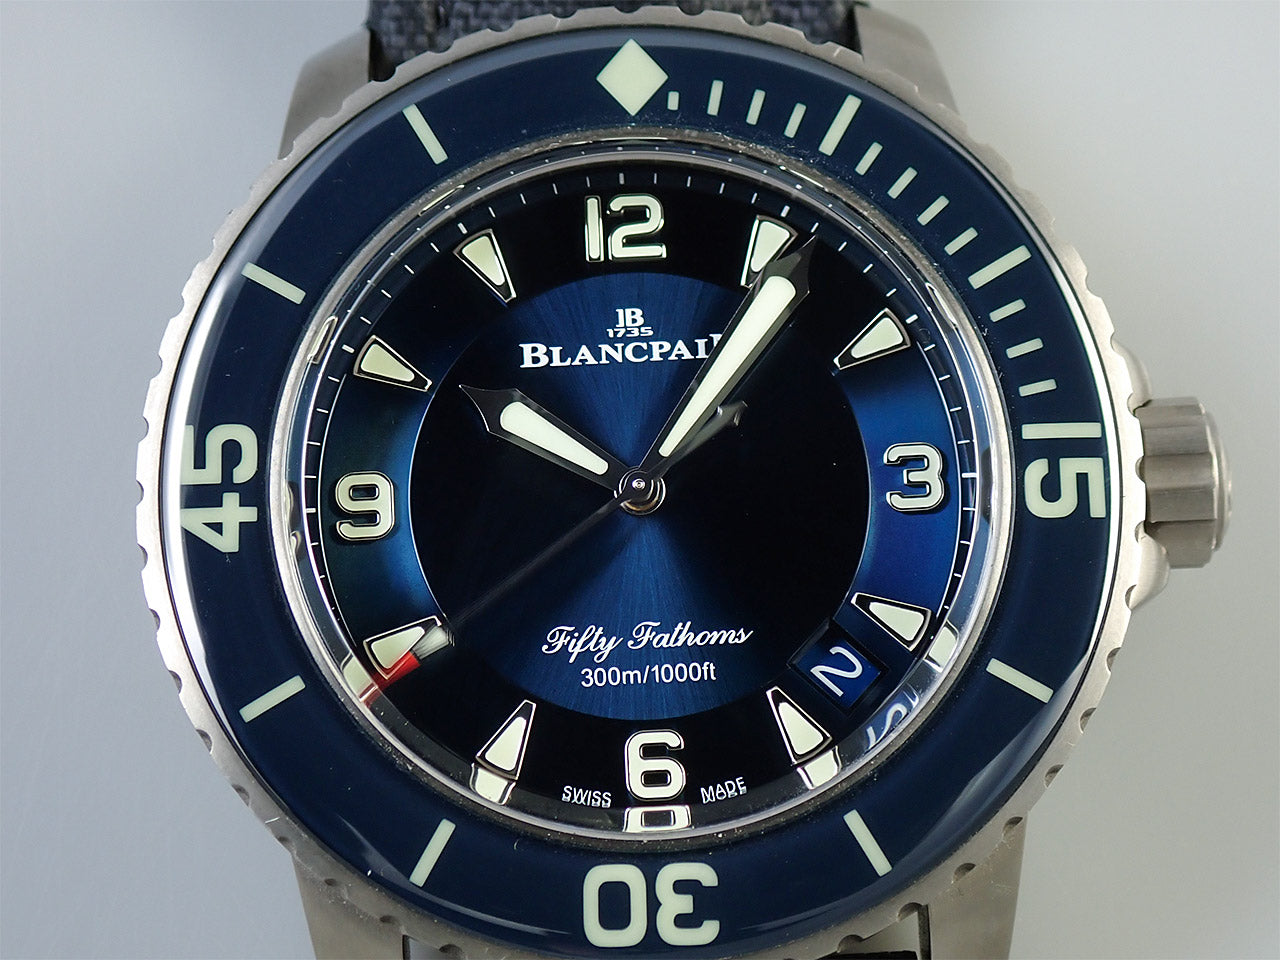 Blancpain Fifty Fathoms Automatic &lt;Warranty, Box, etc.&gt;